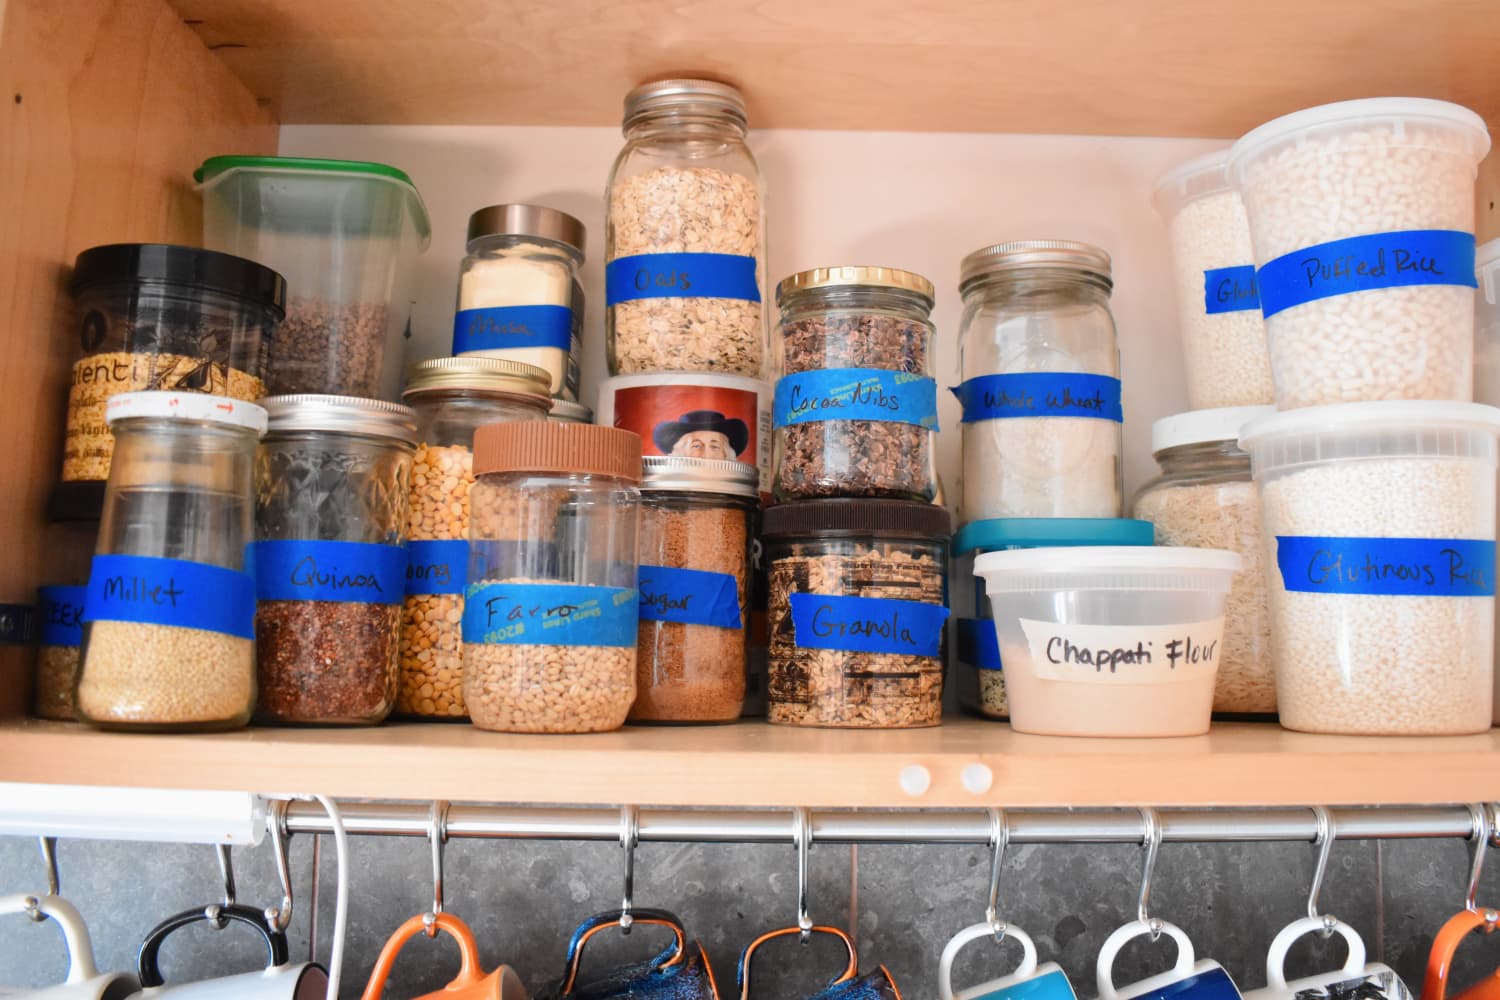 Kitchen storage jars, a great way of organizing ingredients and saving space